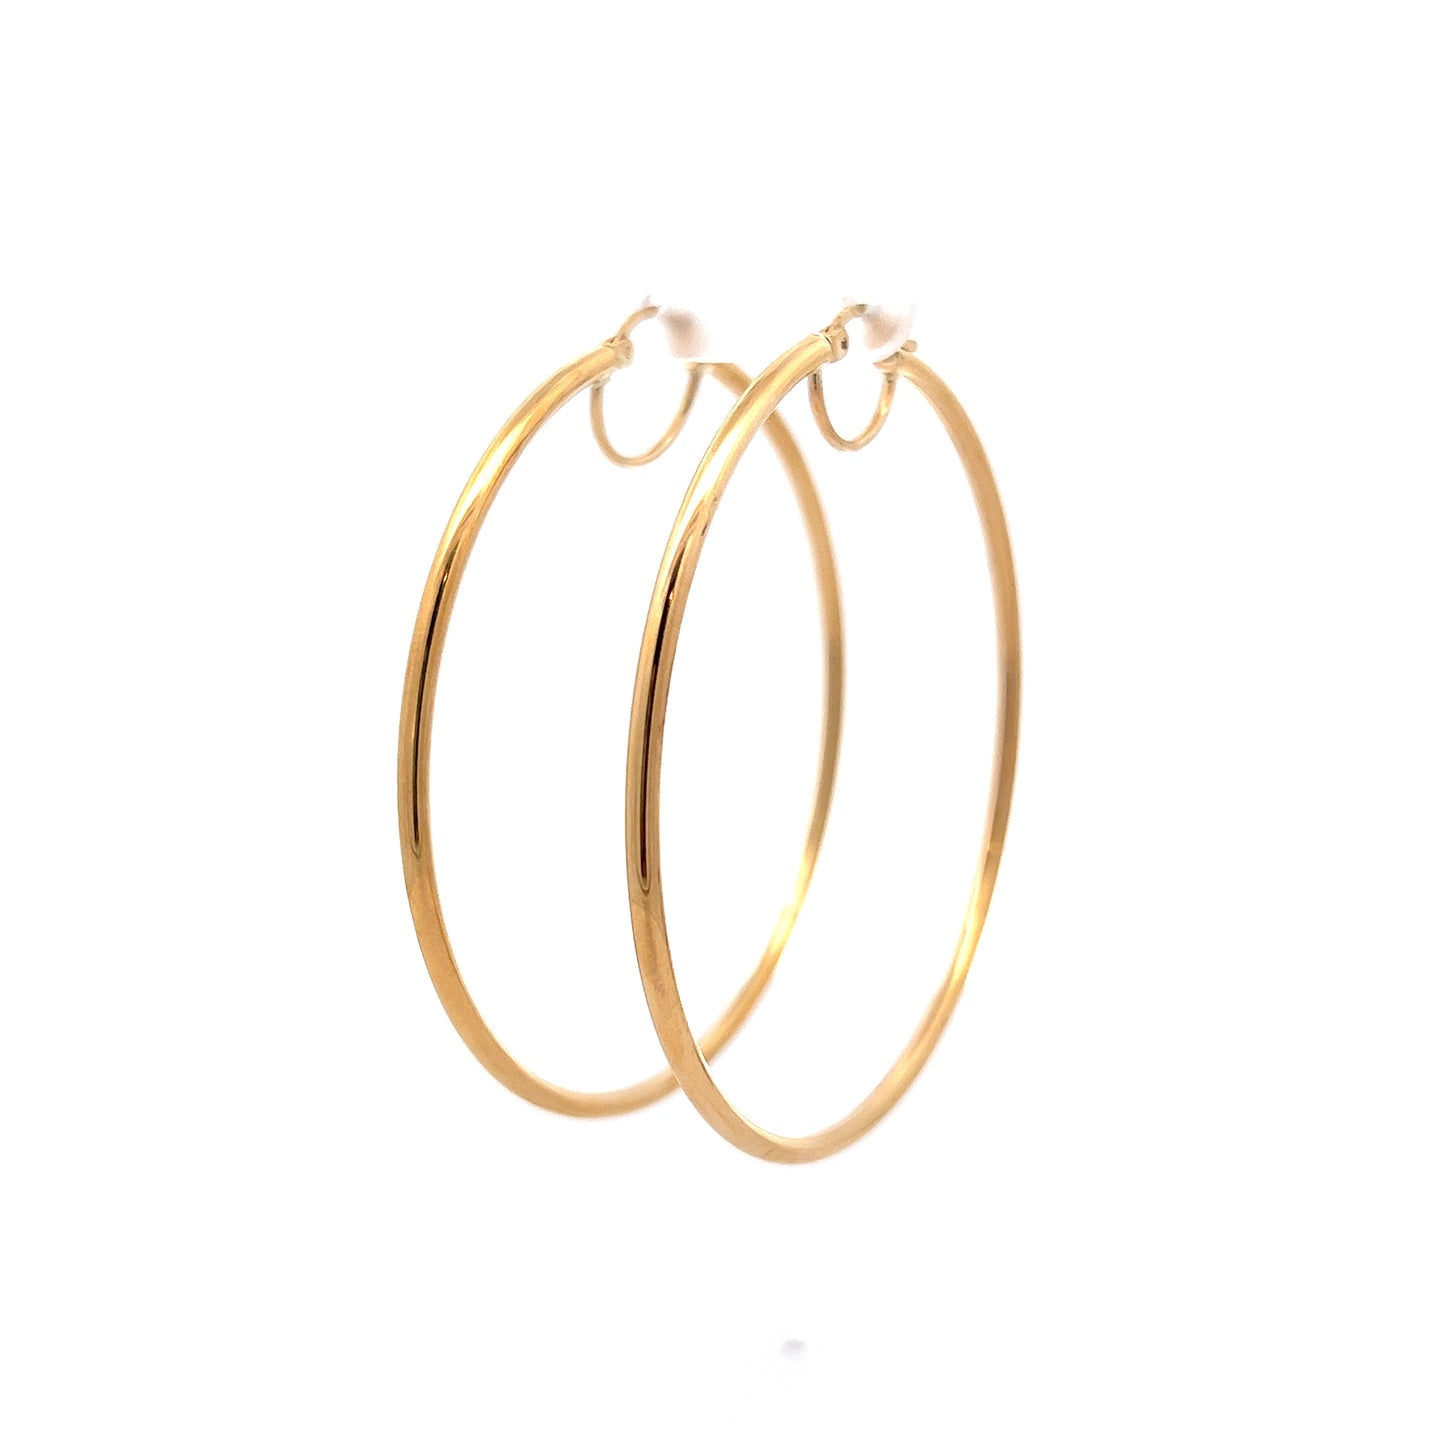 Large Hoop Earrings in 10K Yellow Gold